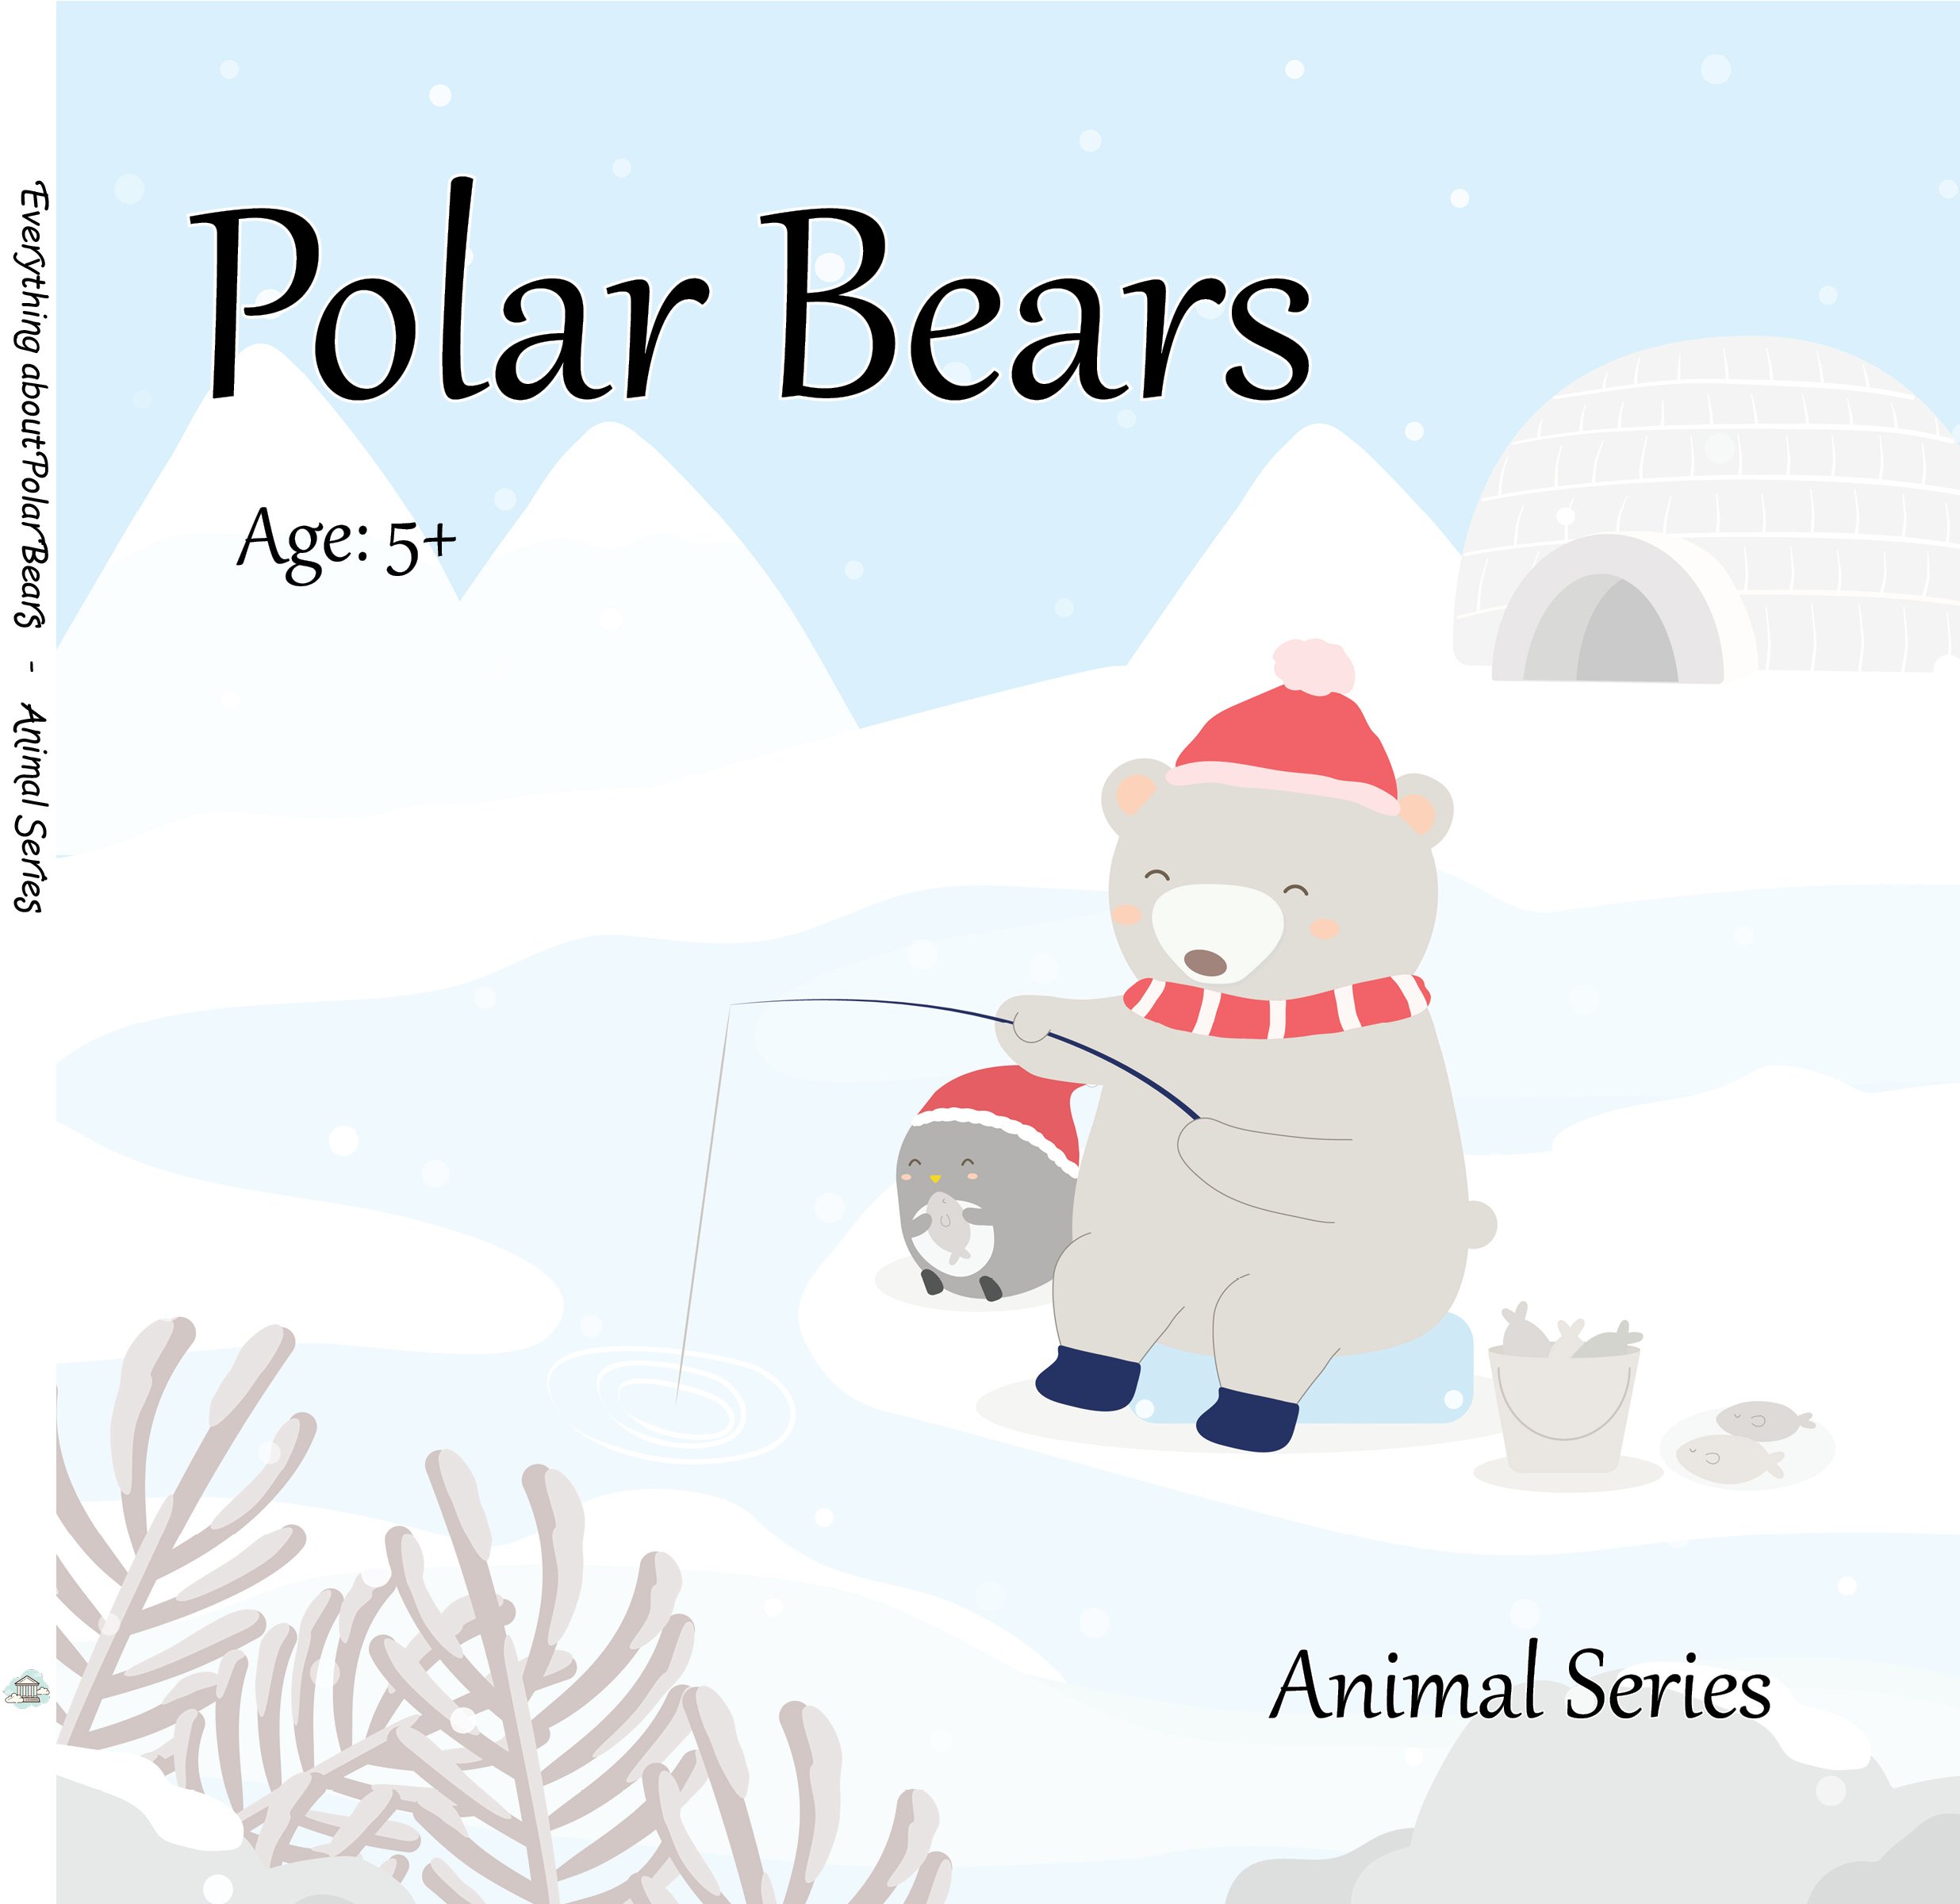 Everything about Polar Bears - Animal Series.jpg